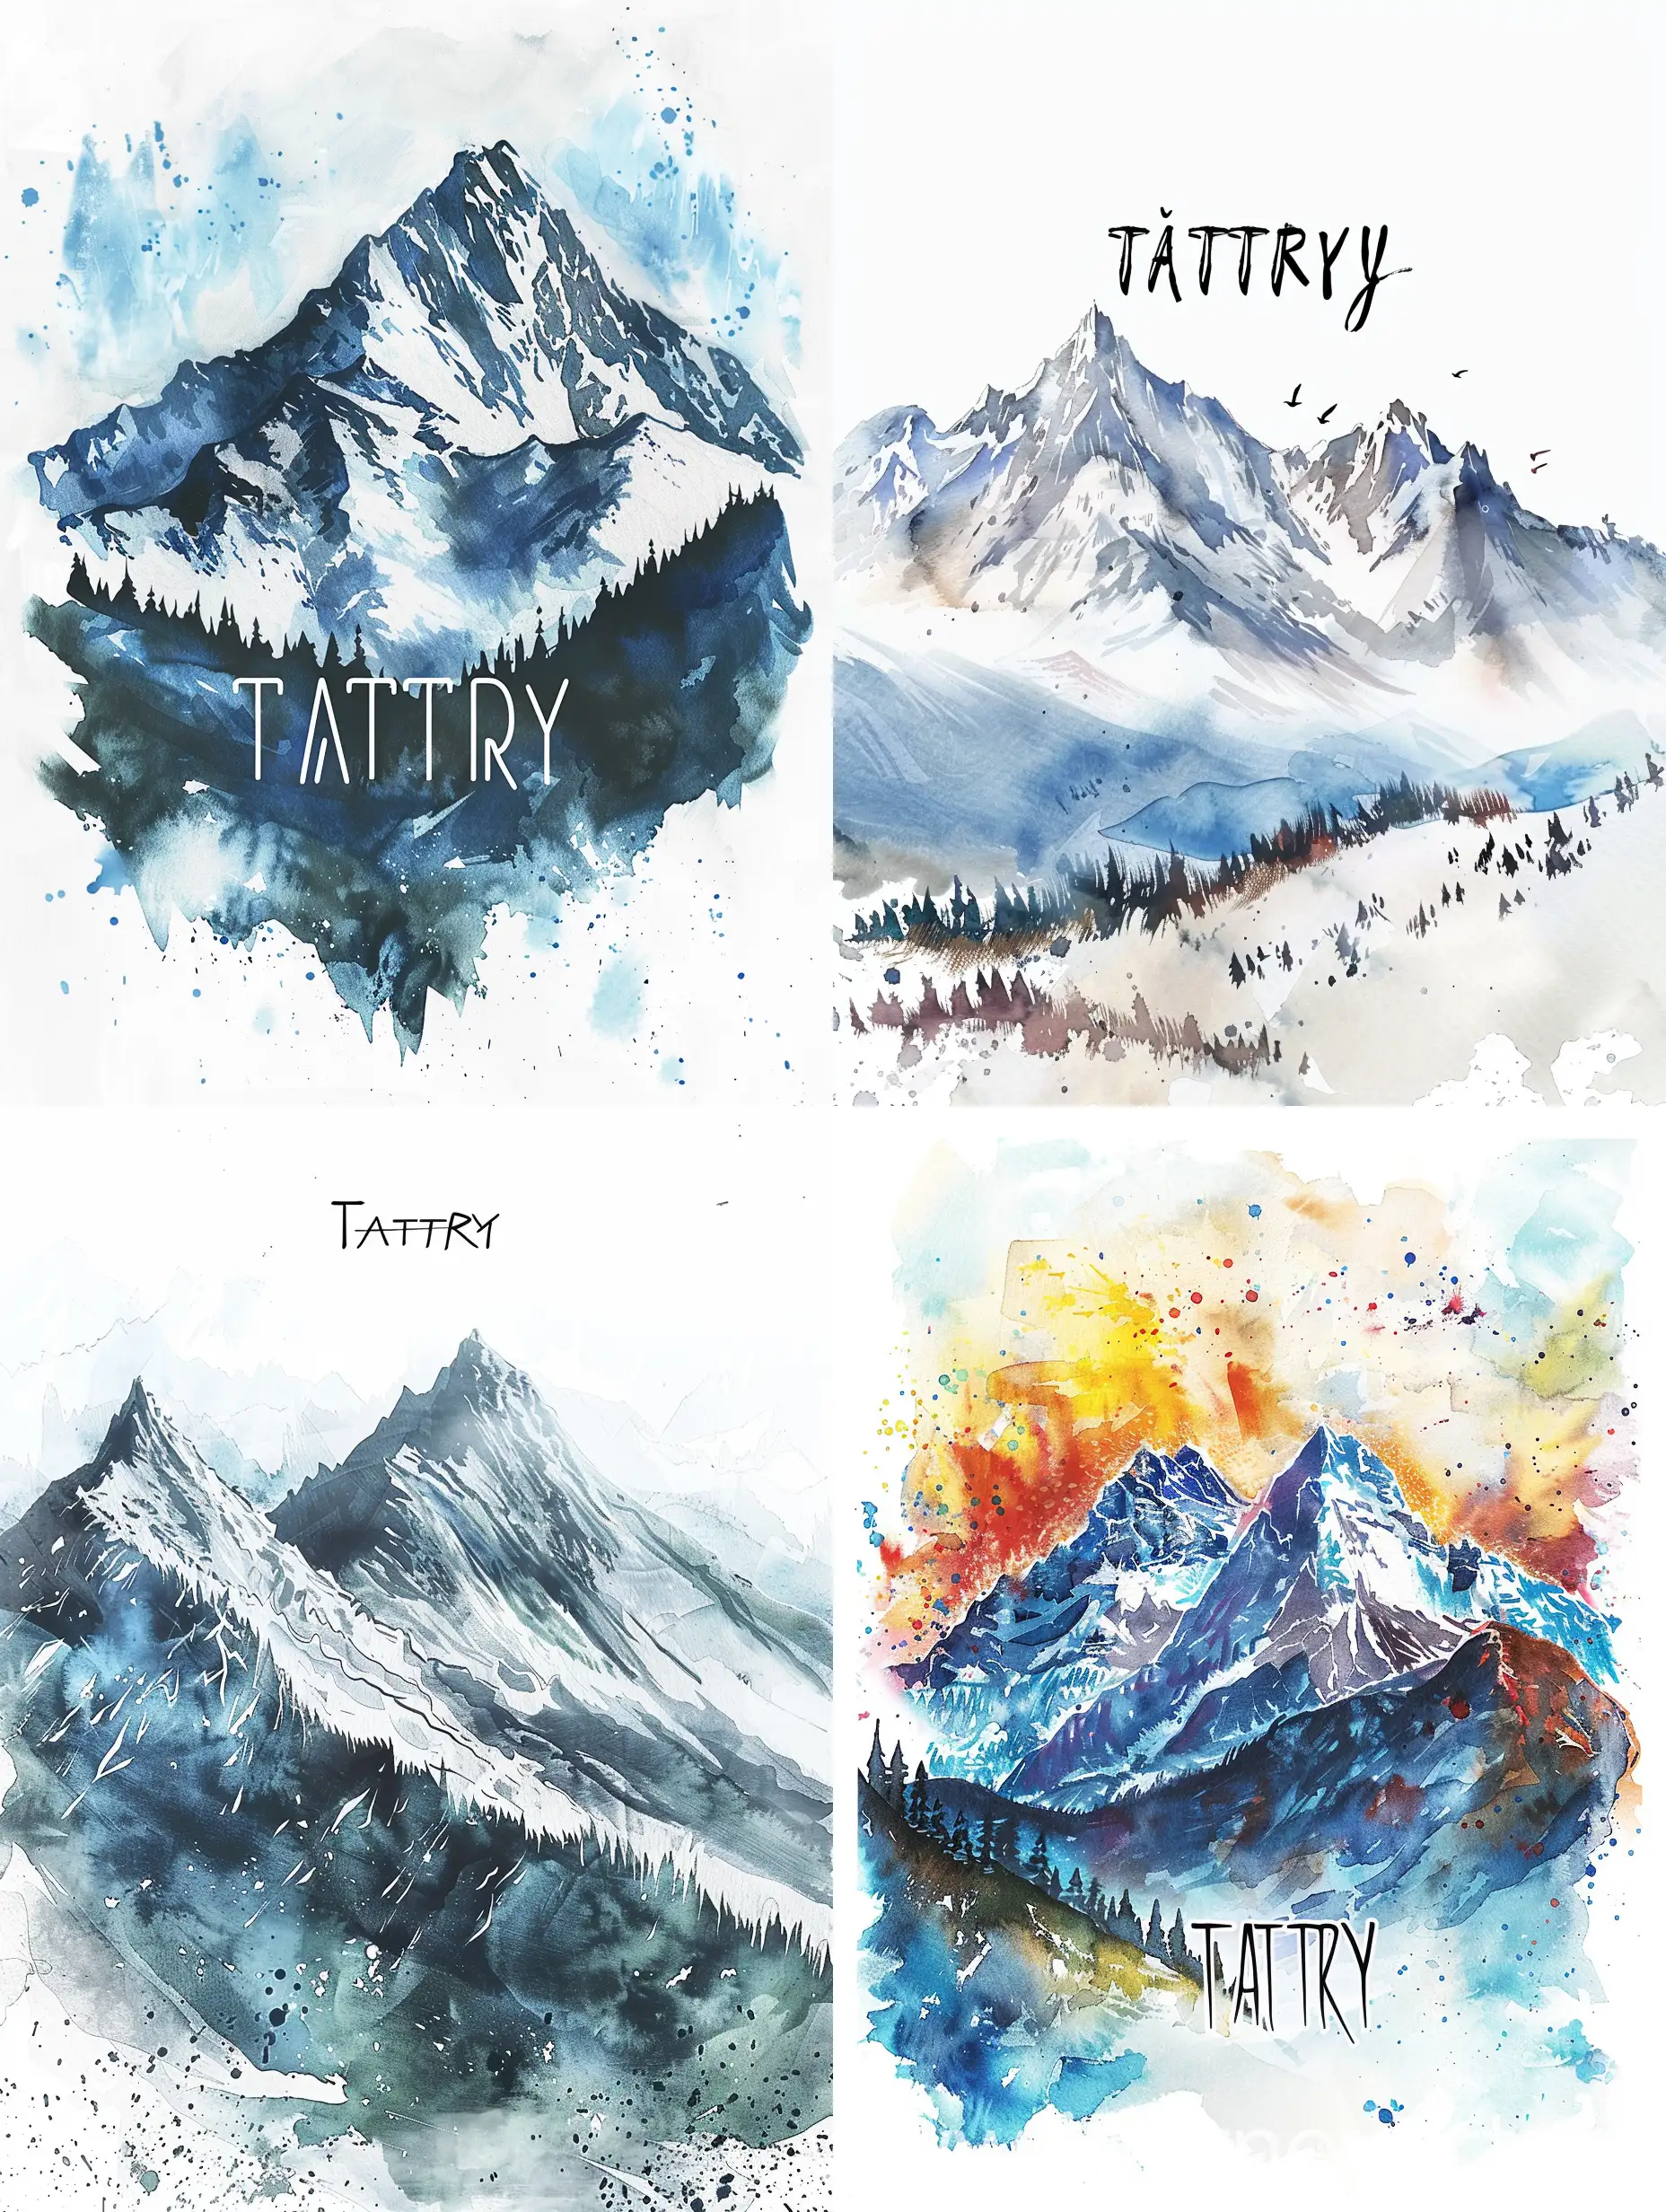 Stunning-Watercolor-Polish-Tatra-Mountains-Poster